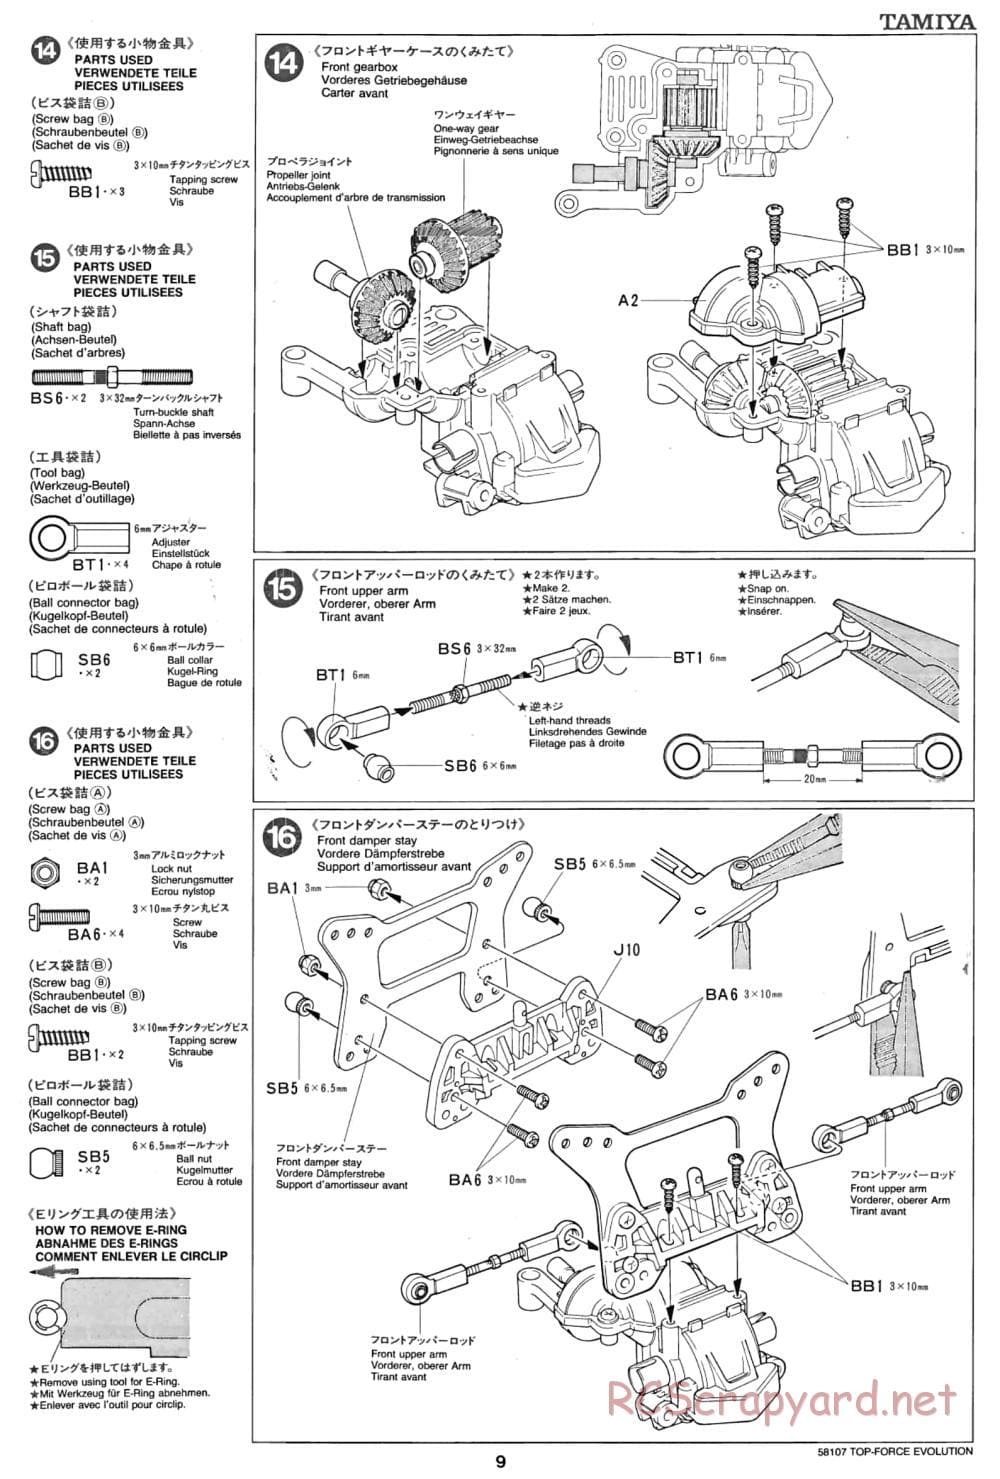 Tamiya - Top Force Evolution Chassis - Manual - Page 9